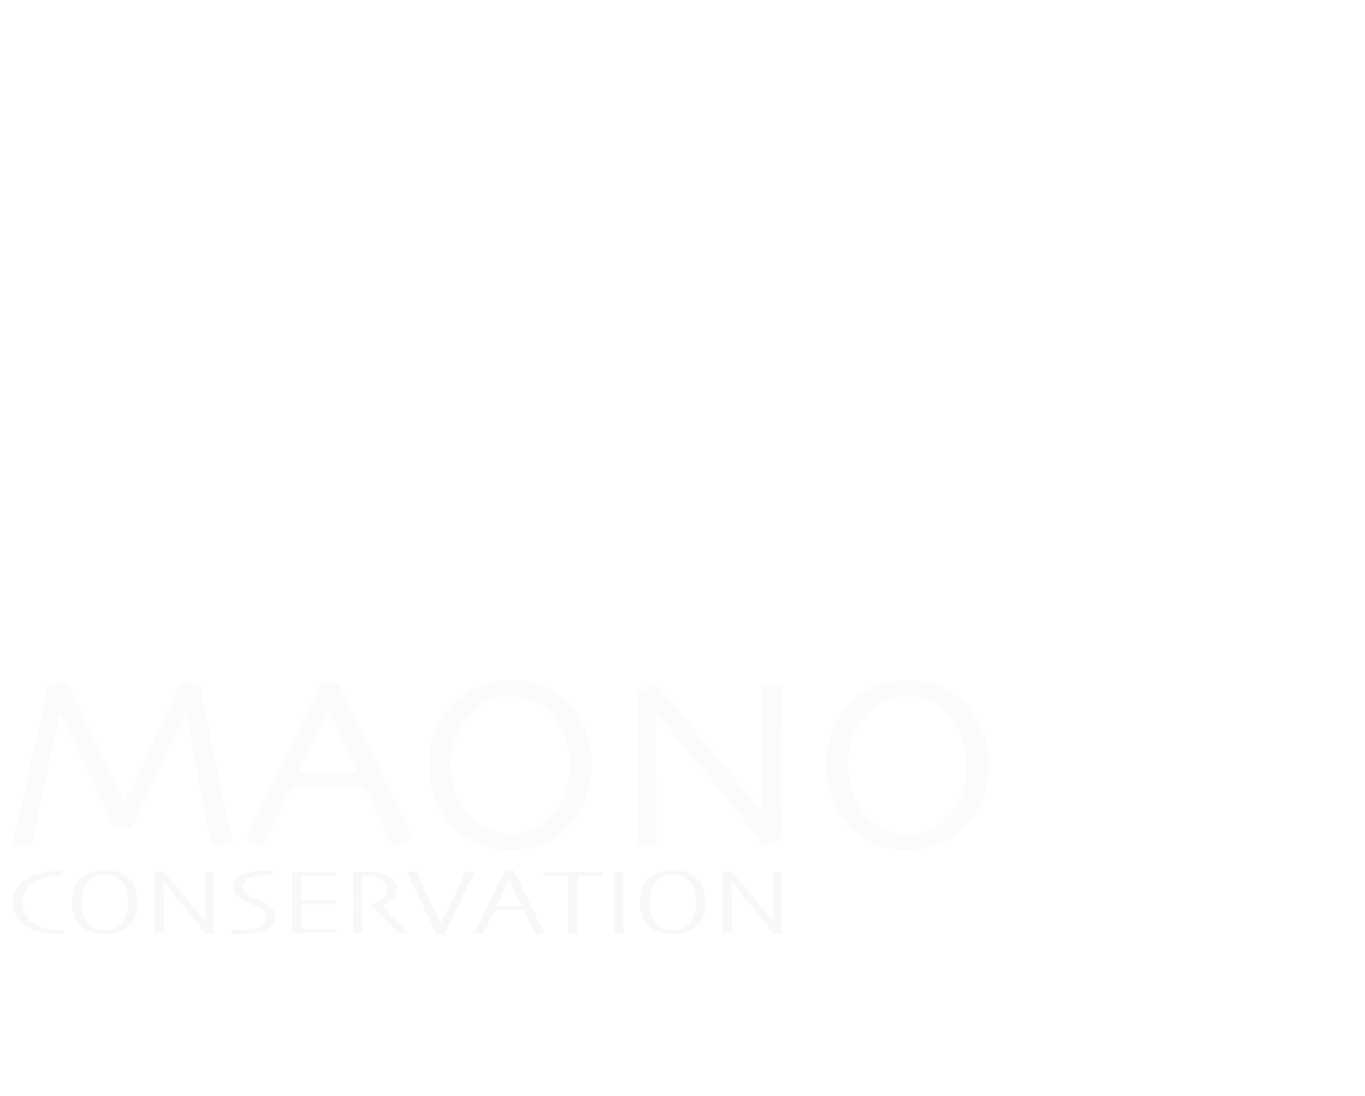 Maono Conservation